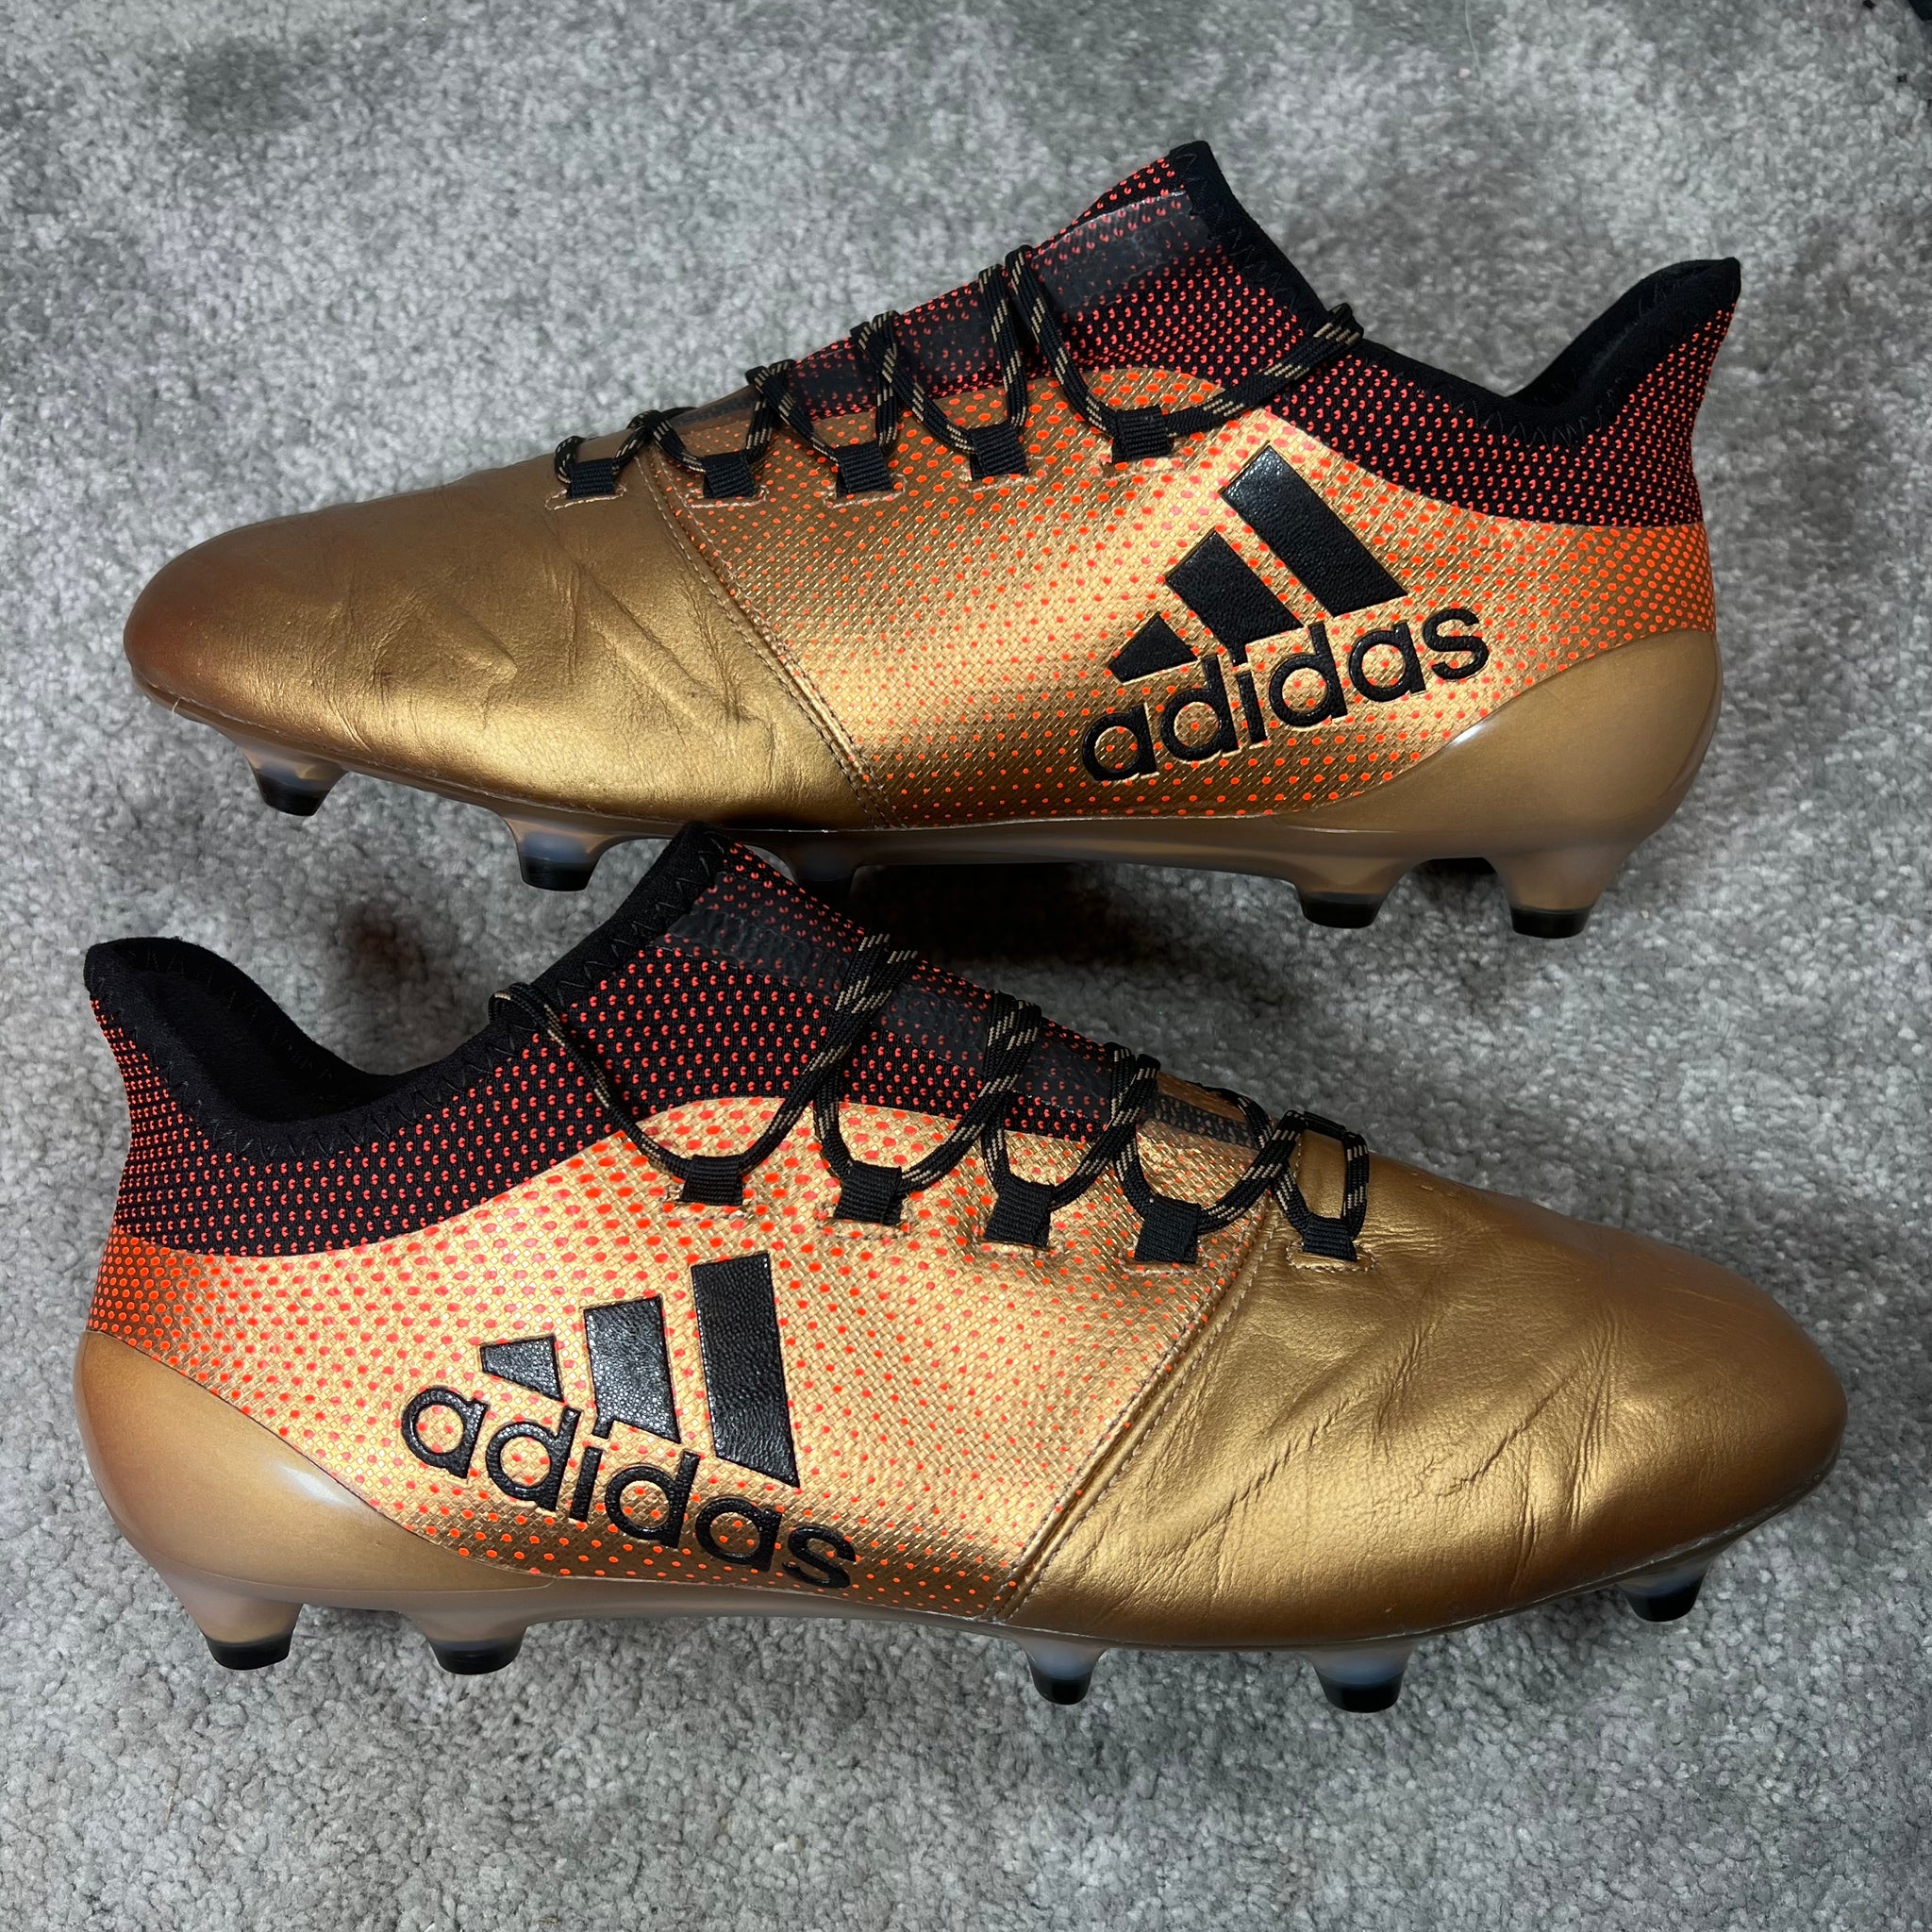 Adidas X 17.1 FG Leather – The Football